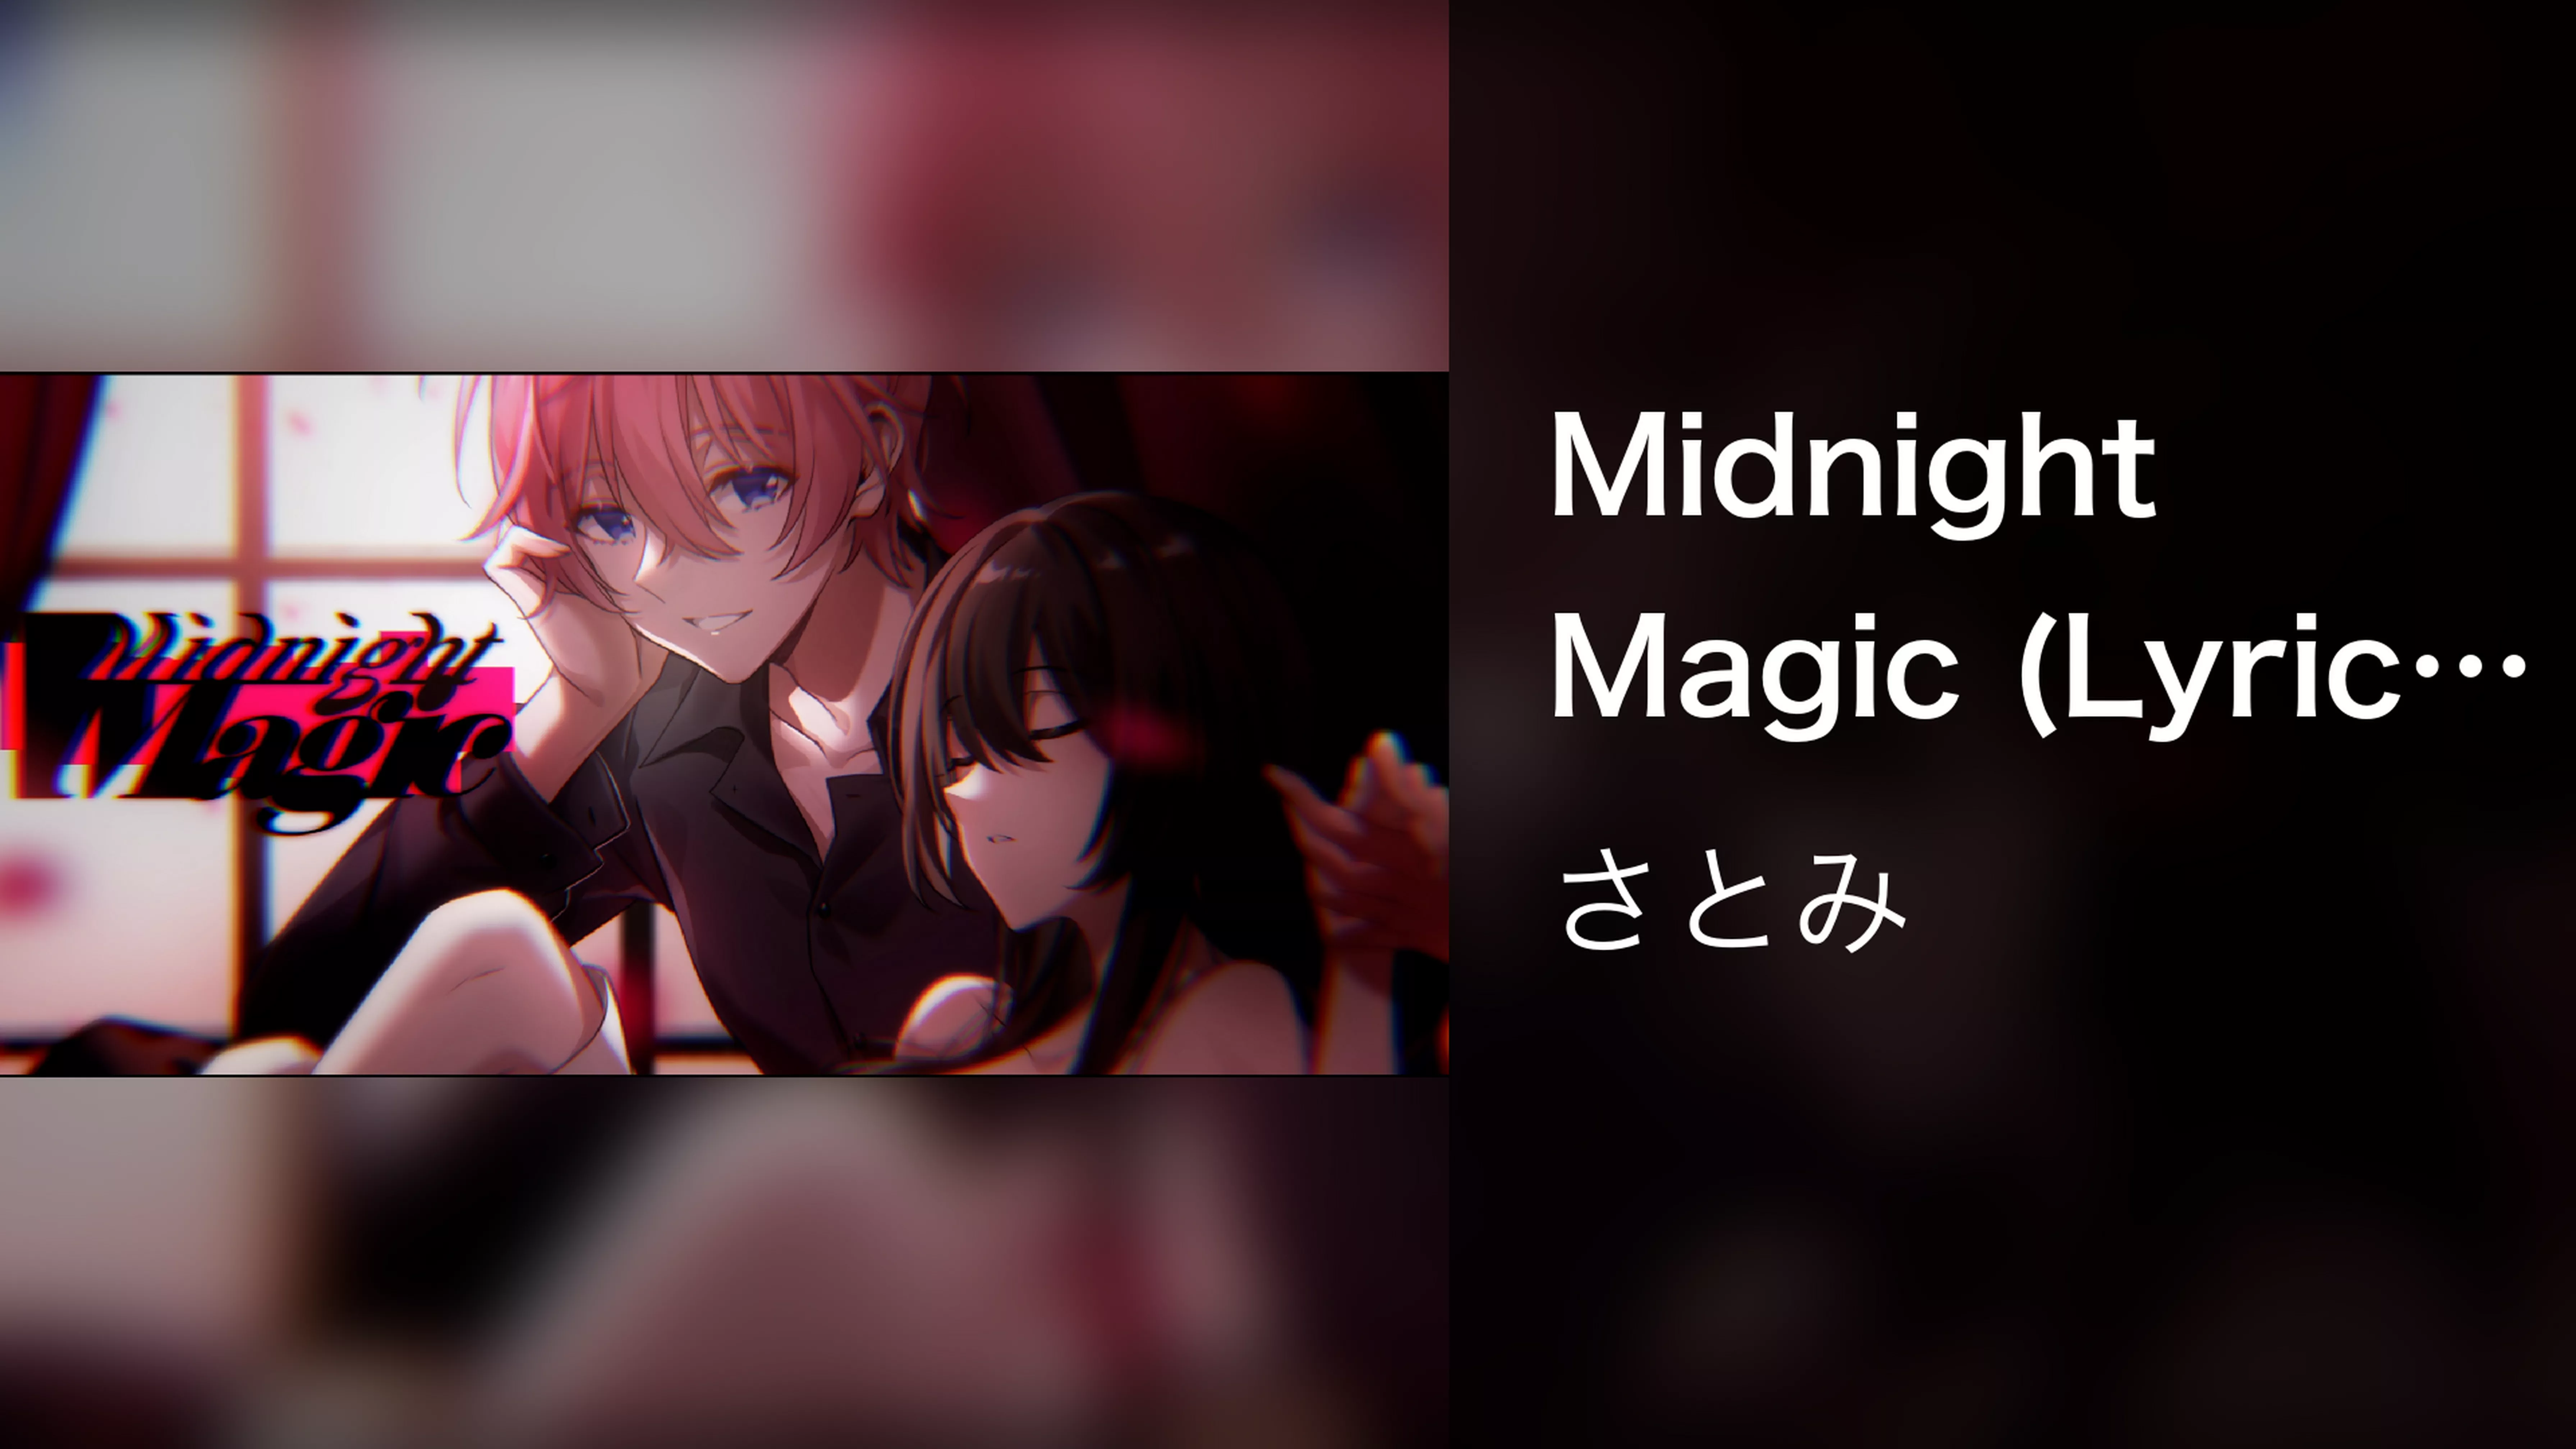 Midnight Magic (Lyric Video)